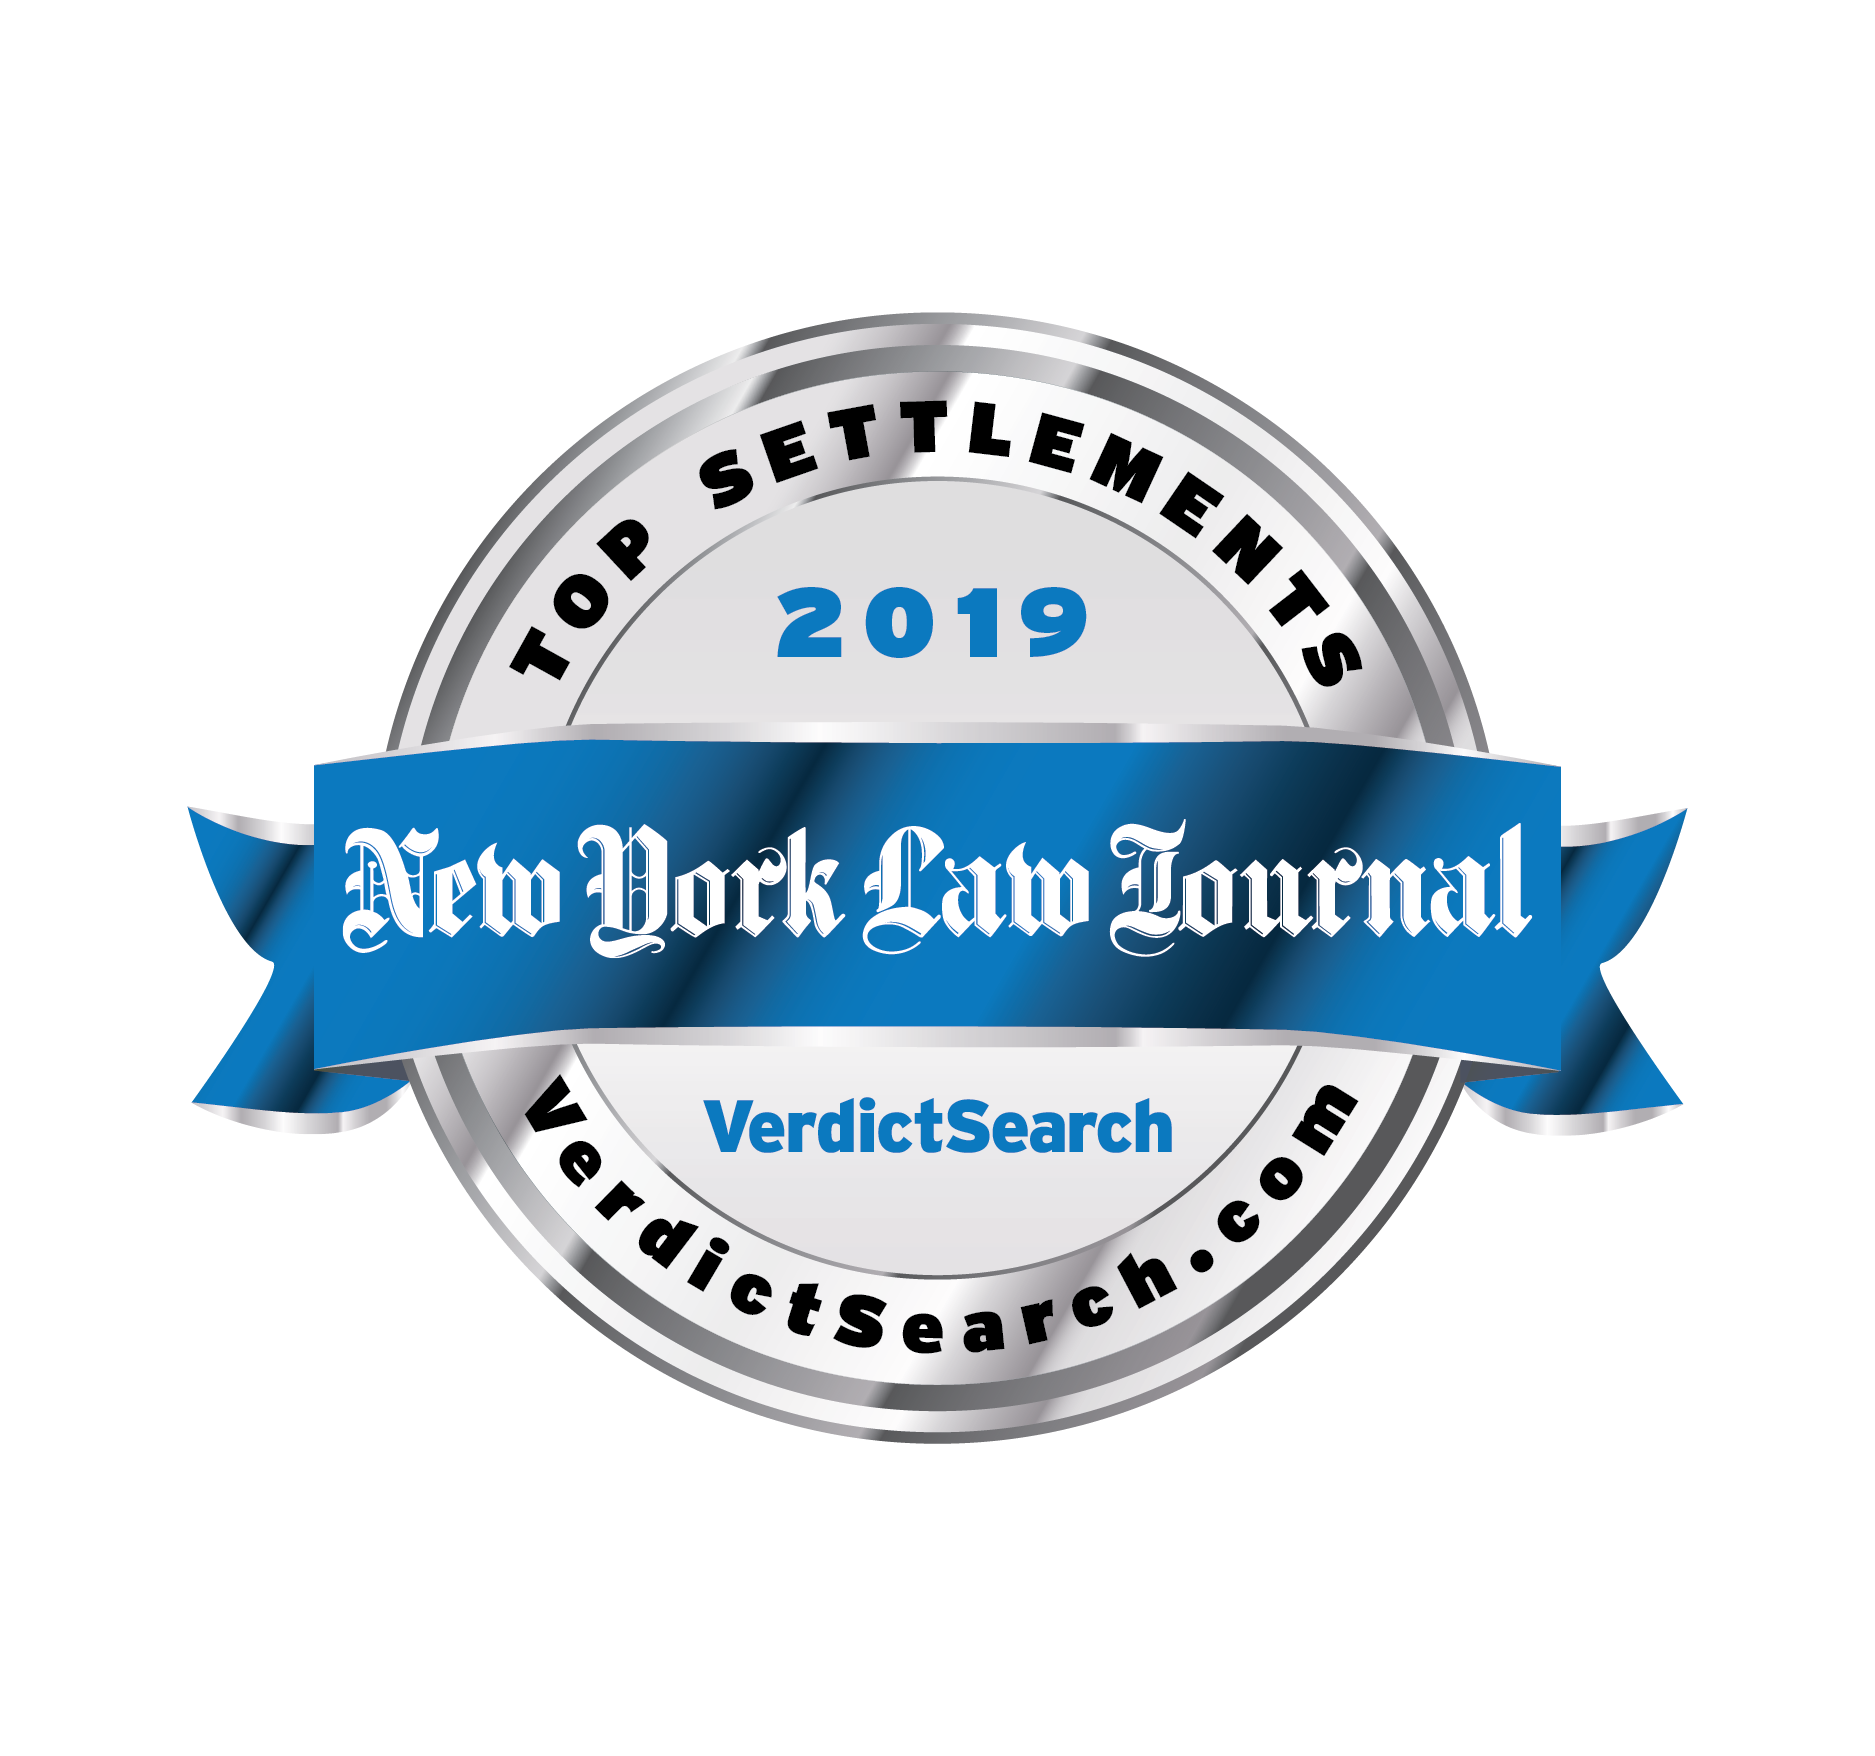 Top Settlements Badge - New York Law Journal 2019